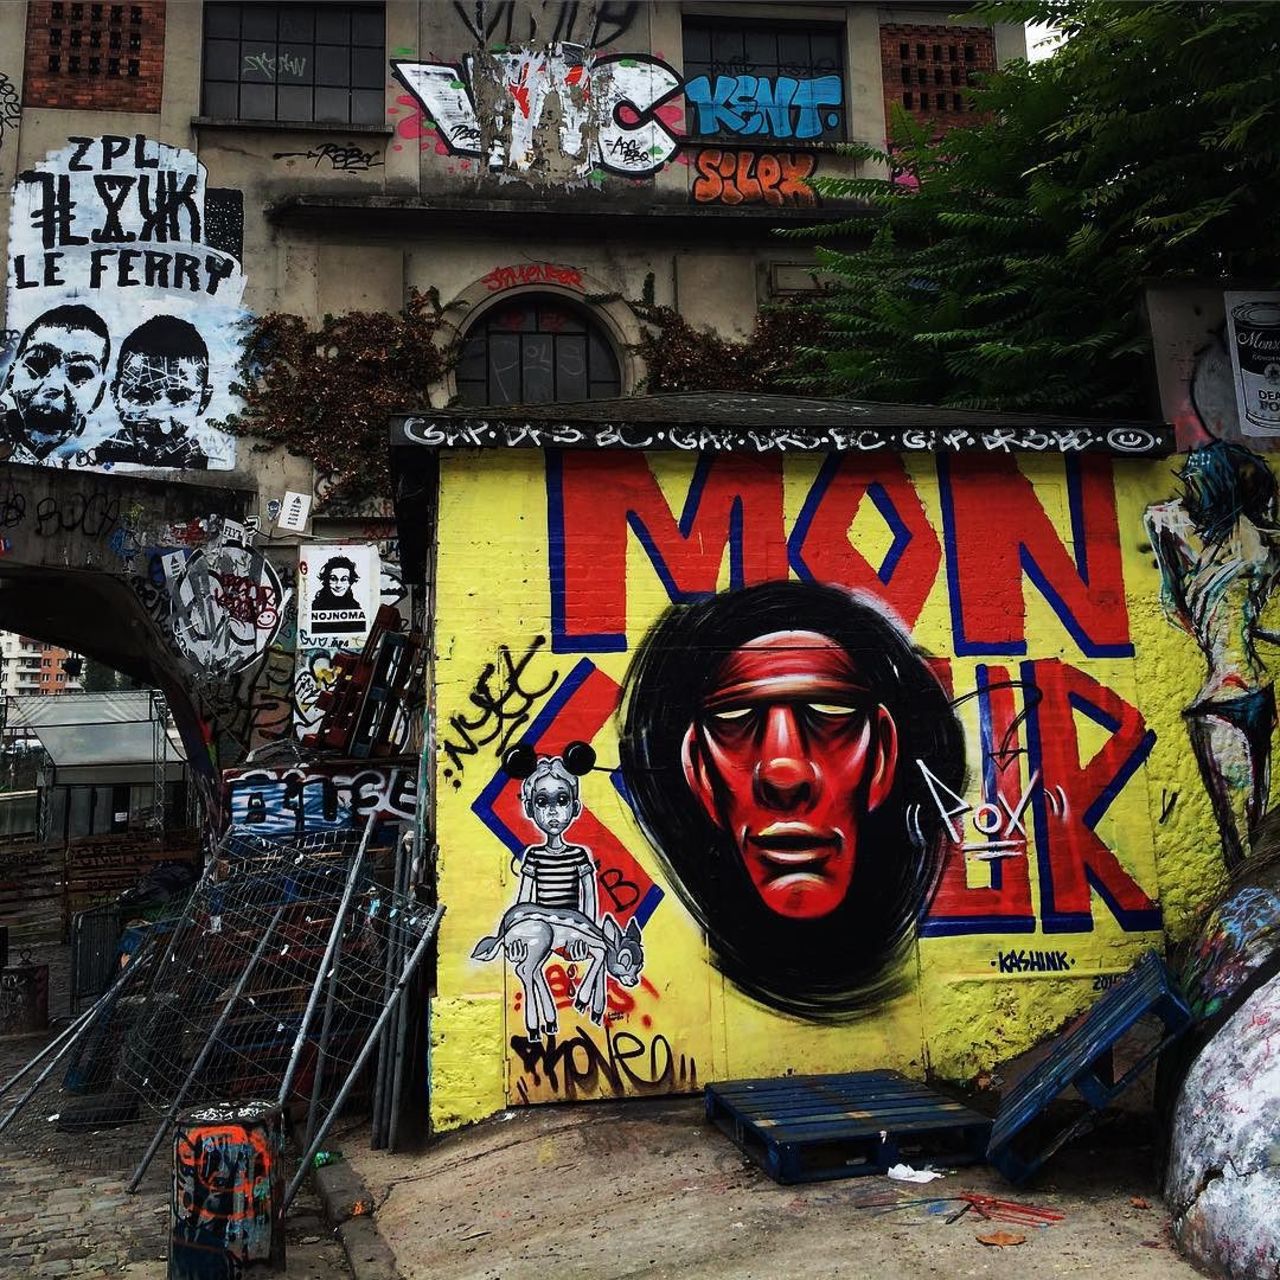 #Paris #graffiti photo by @allaboutparisandbeyond http://ift.tt/1P0JNVd #StreetArt https://t.co/1U6z3pirda